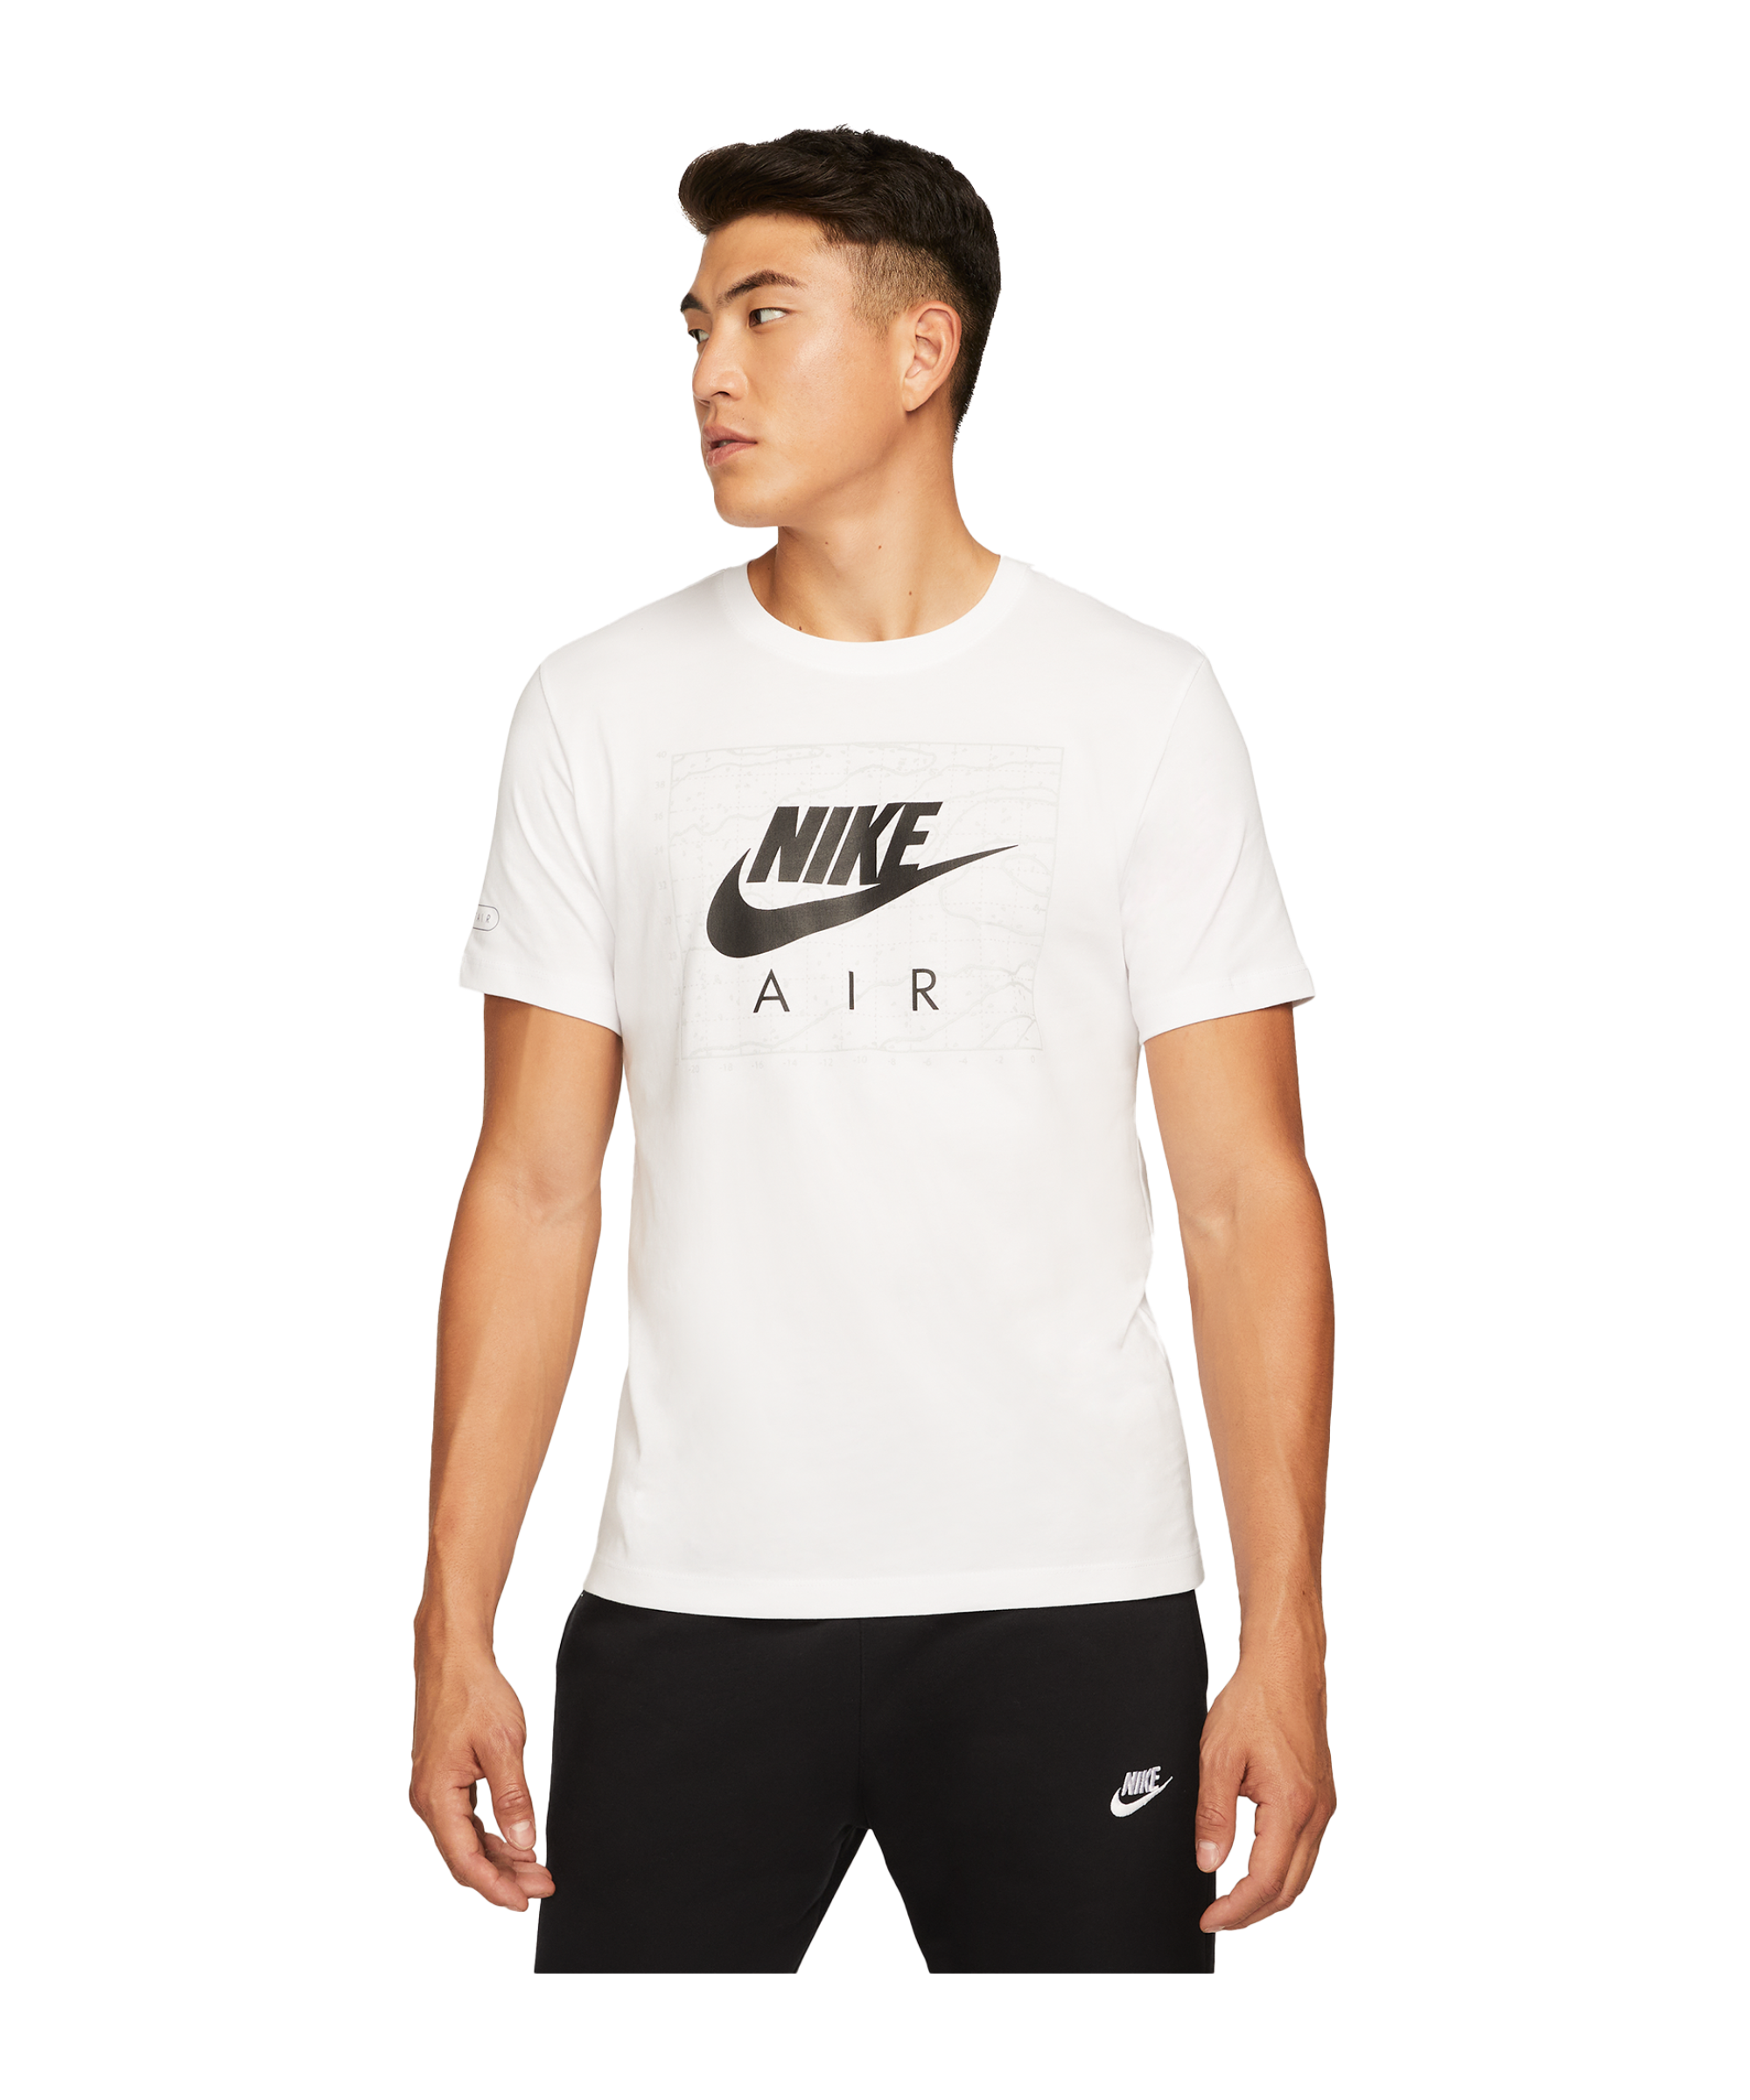 Sluiting Stout Hilarisch Nike Air Style T-Shirt - Wit